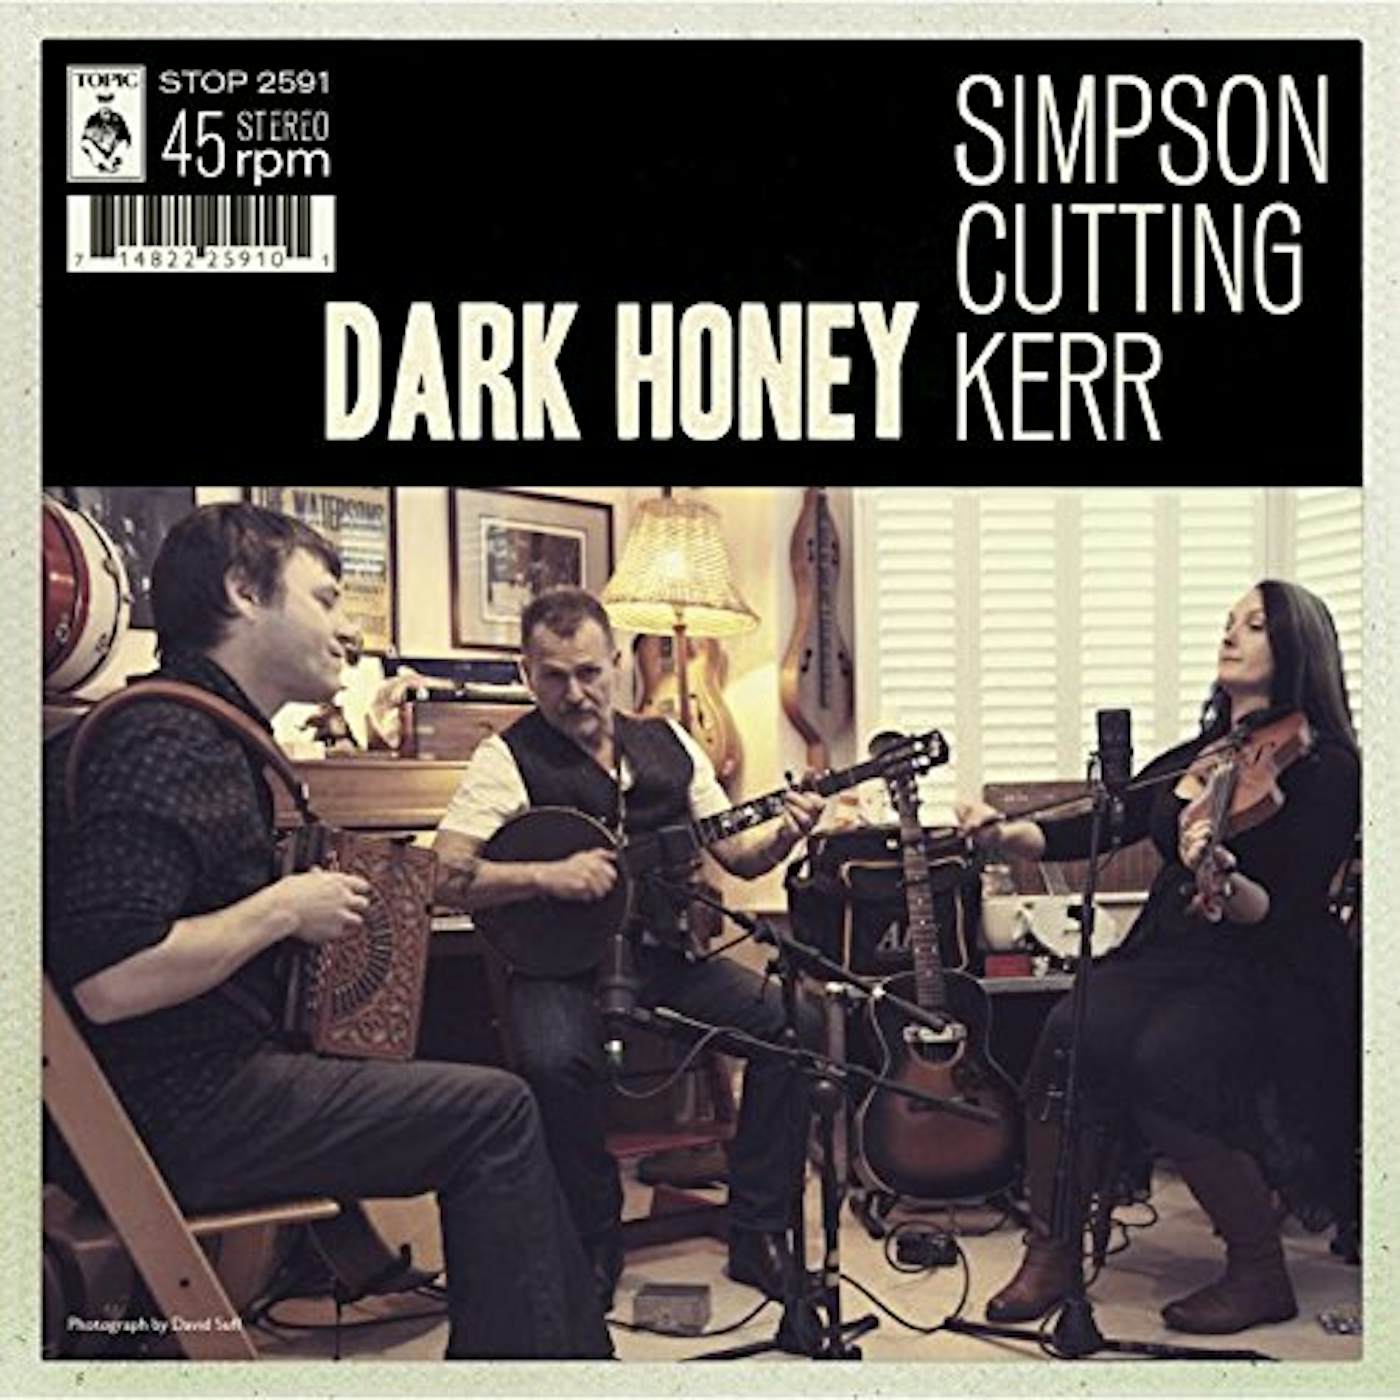 Simpson Cutting Kerr DARK HONEY Vinyl Record - UK Release